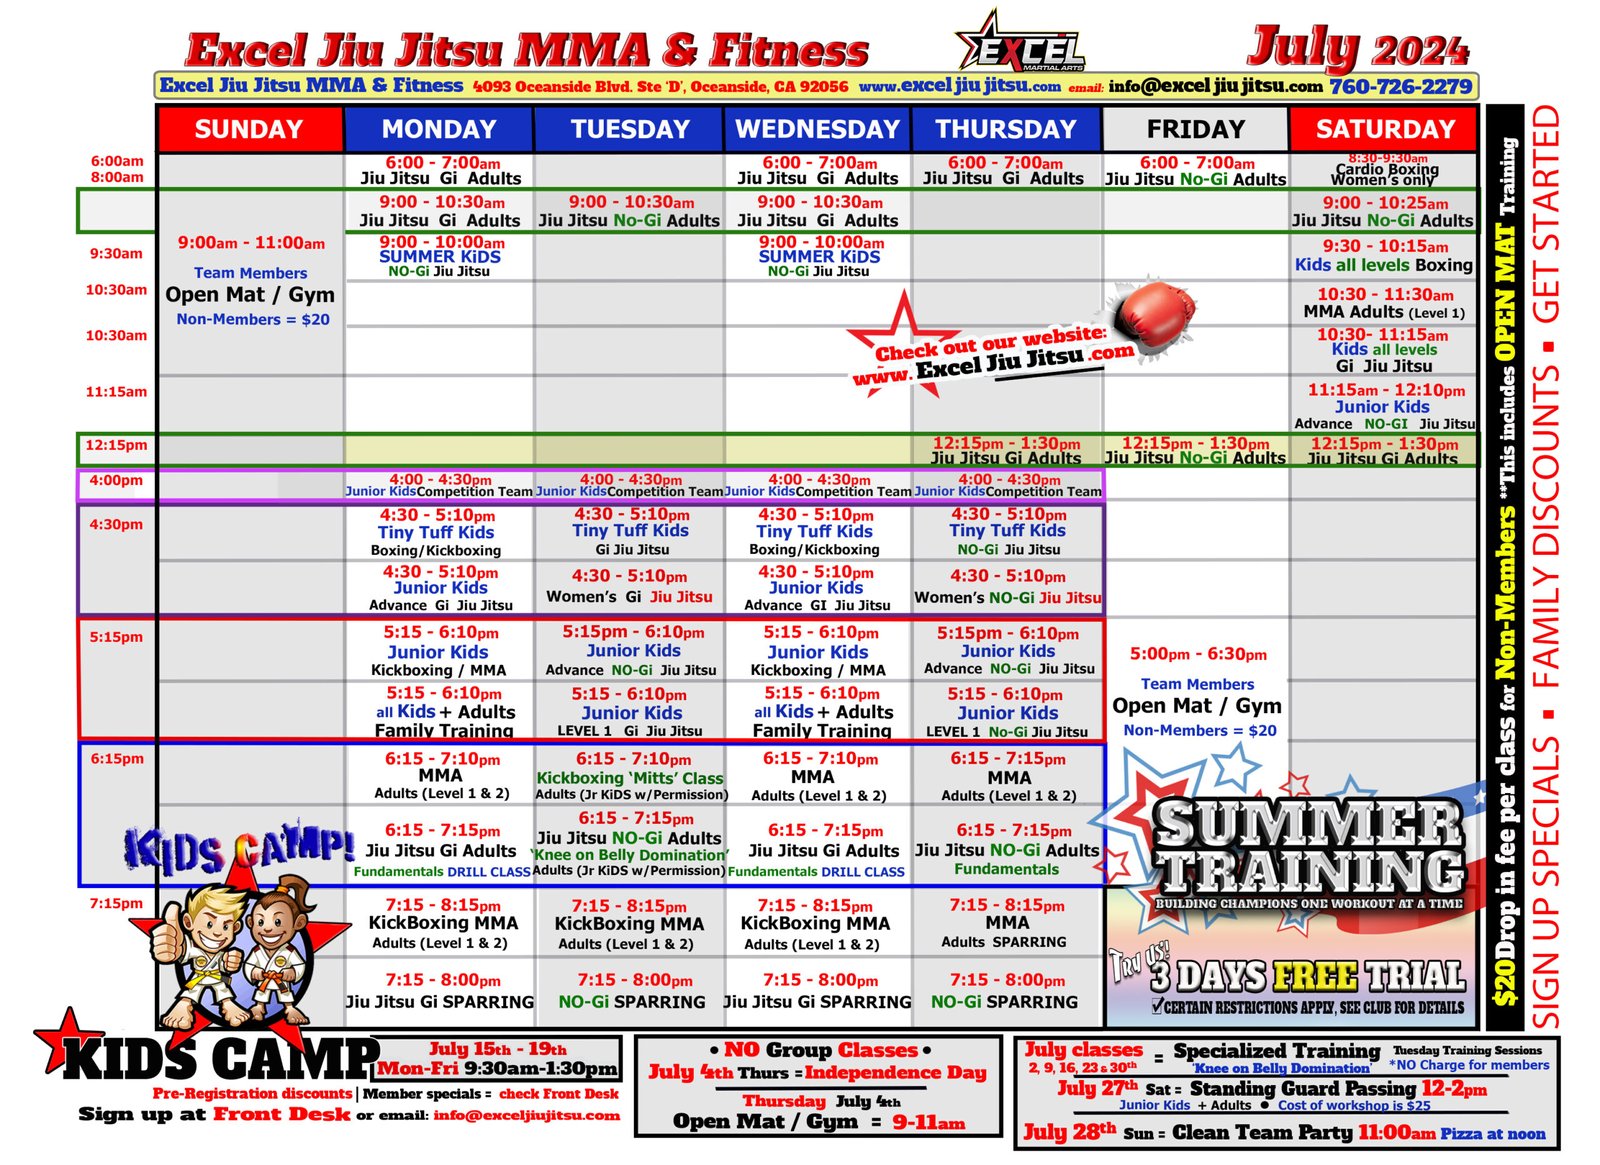 Mixed Martial Arts training schedule at Excel Jiu Jitsu MMA & Fitness.